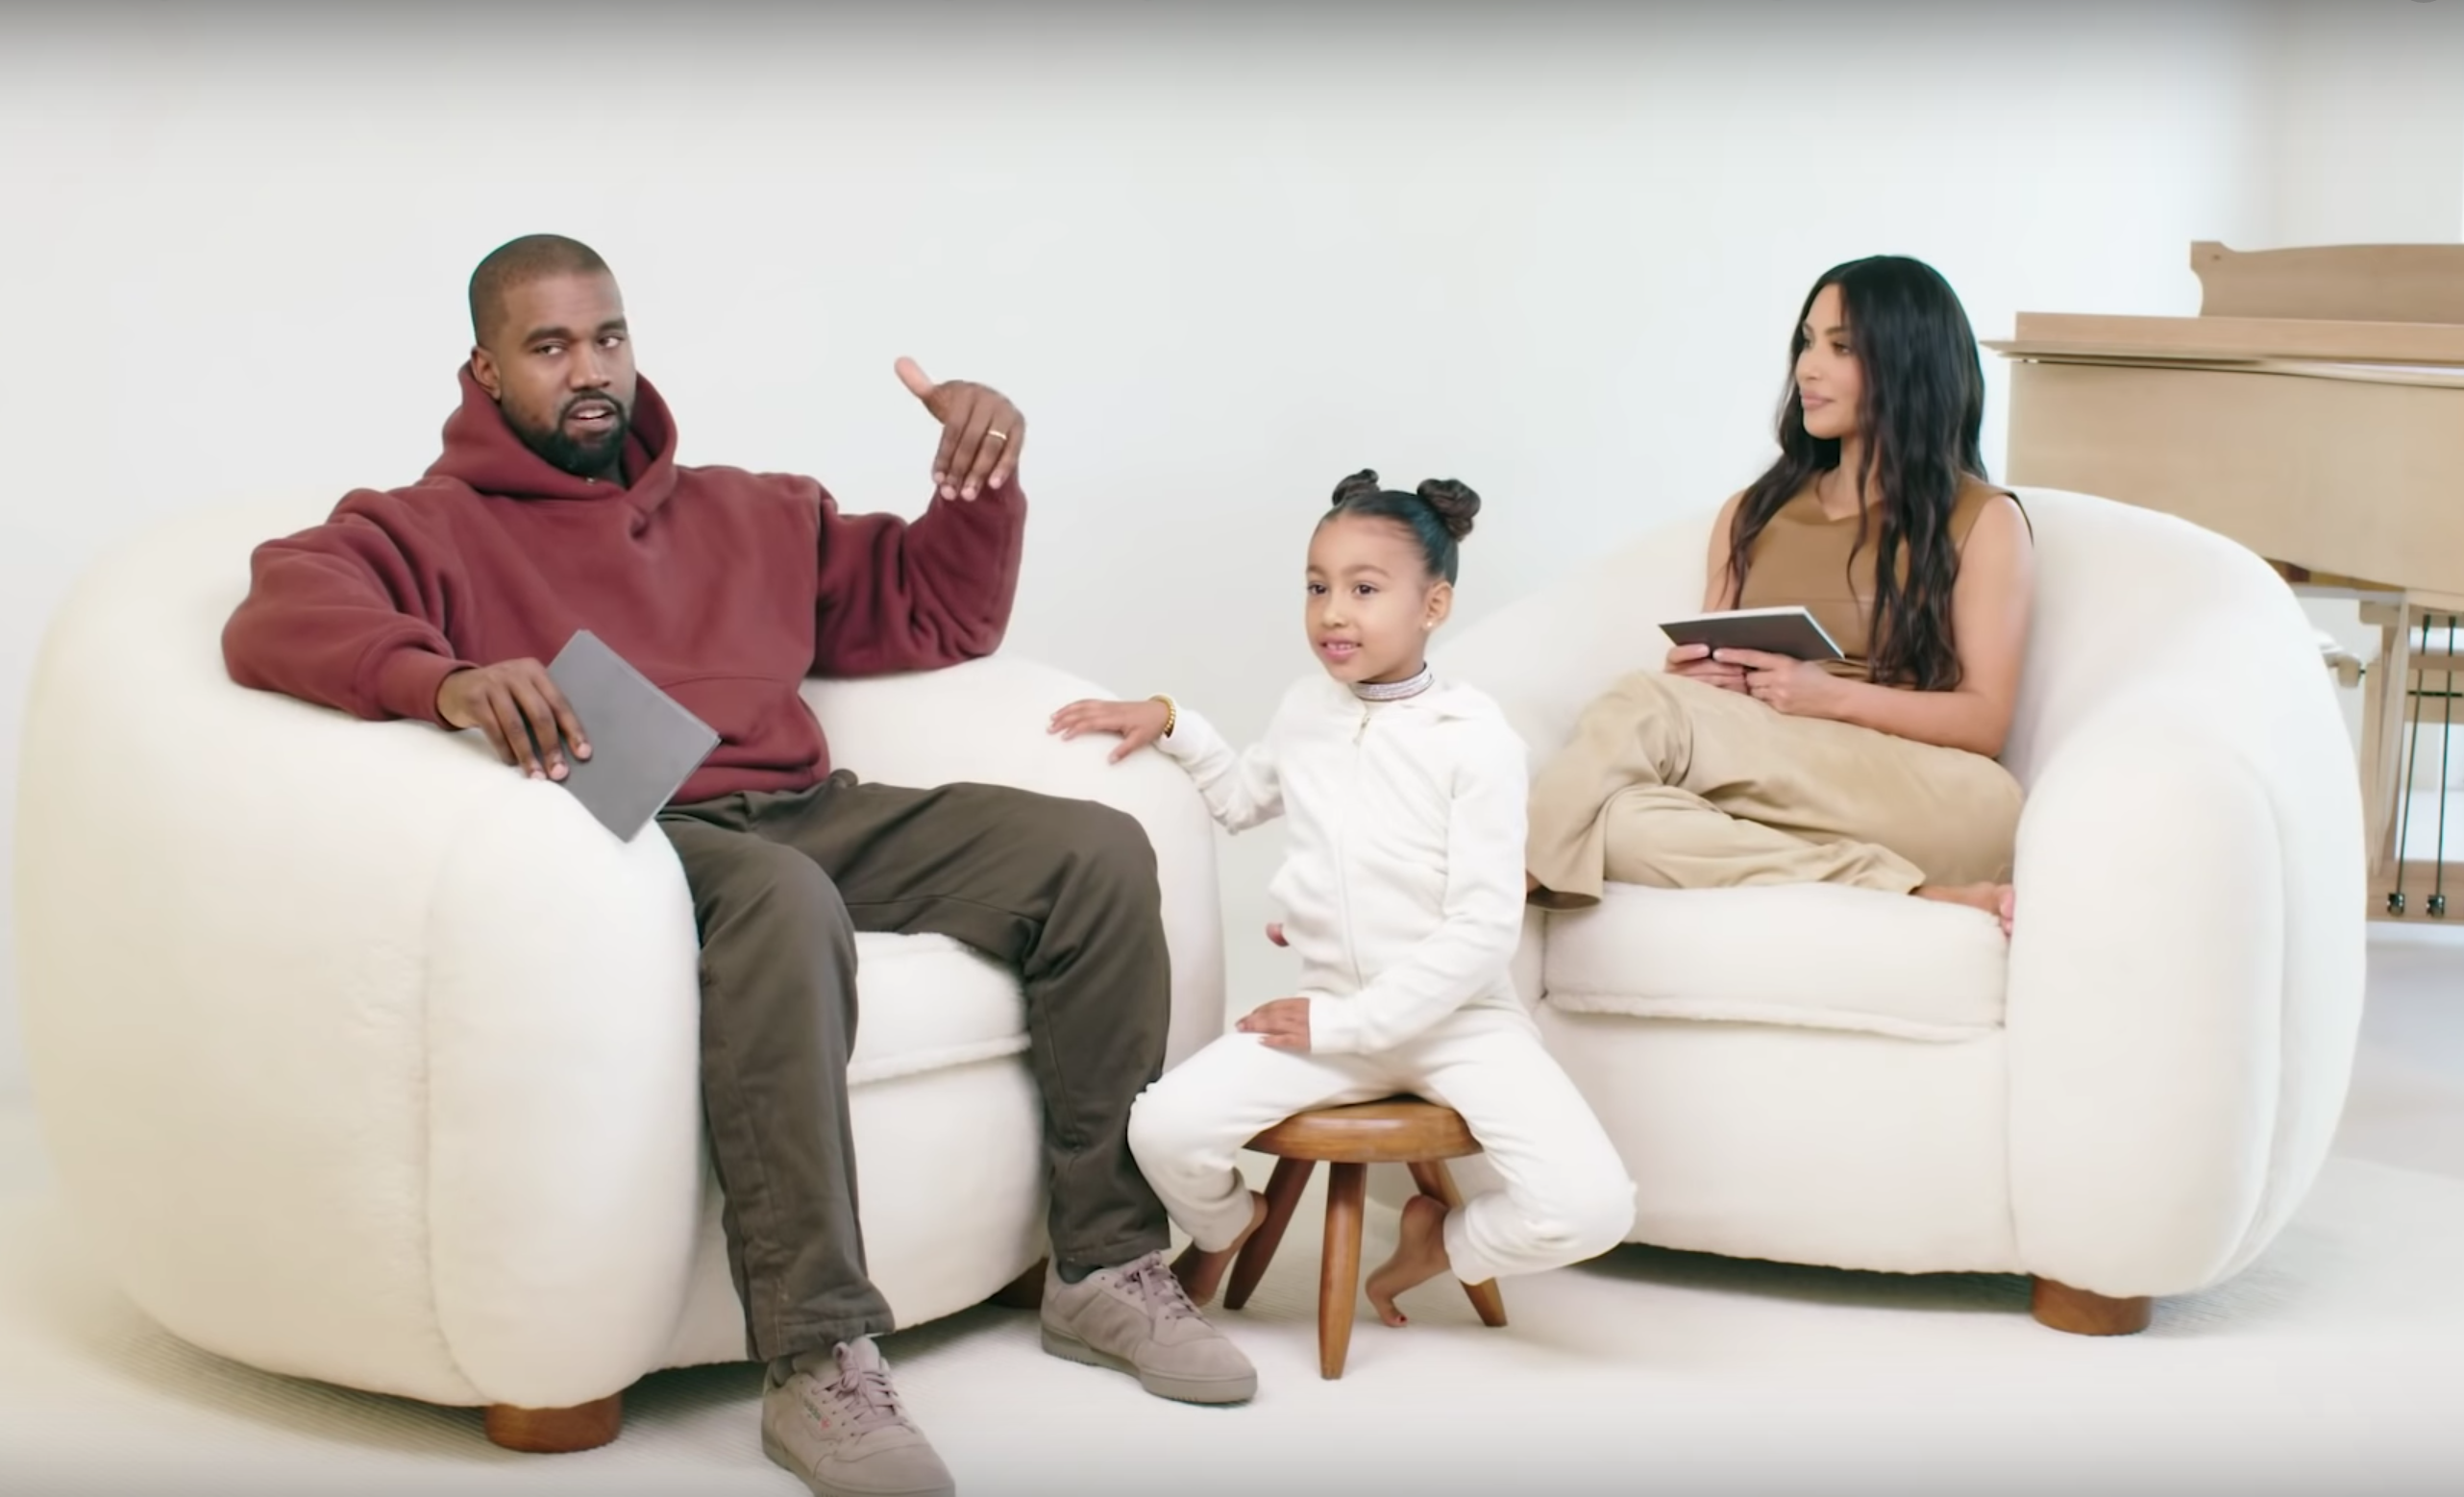 Kim Kardashian and Kanye West Kids Were Inspiration Behind Home Design